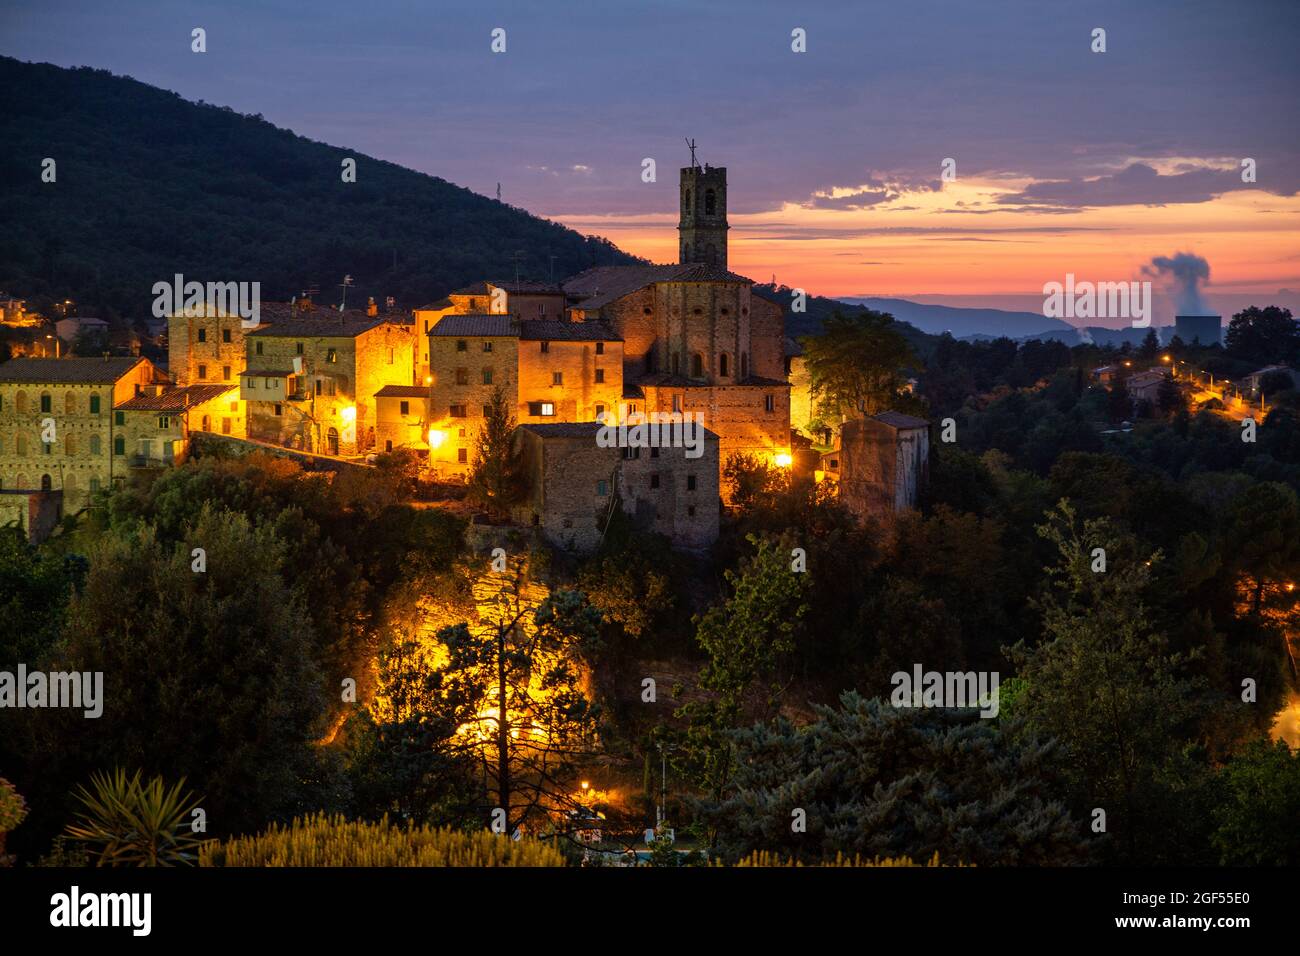 Italy, Province of Pisa, Sasso Pisano, Illuminated village at dusk Stock Photo